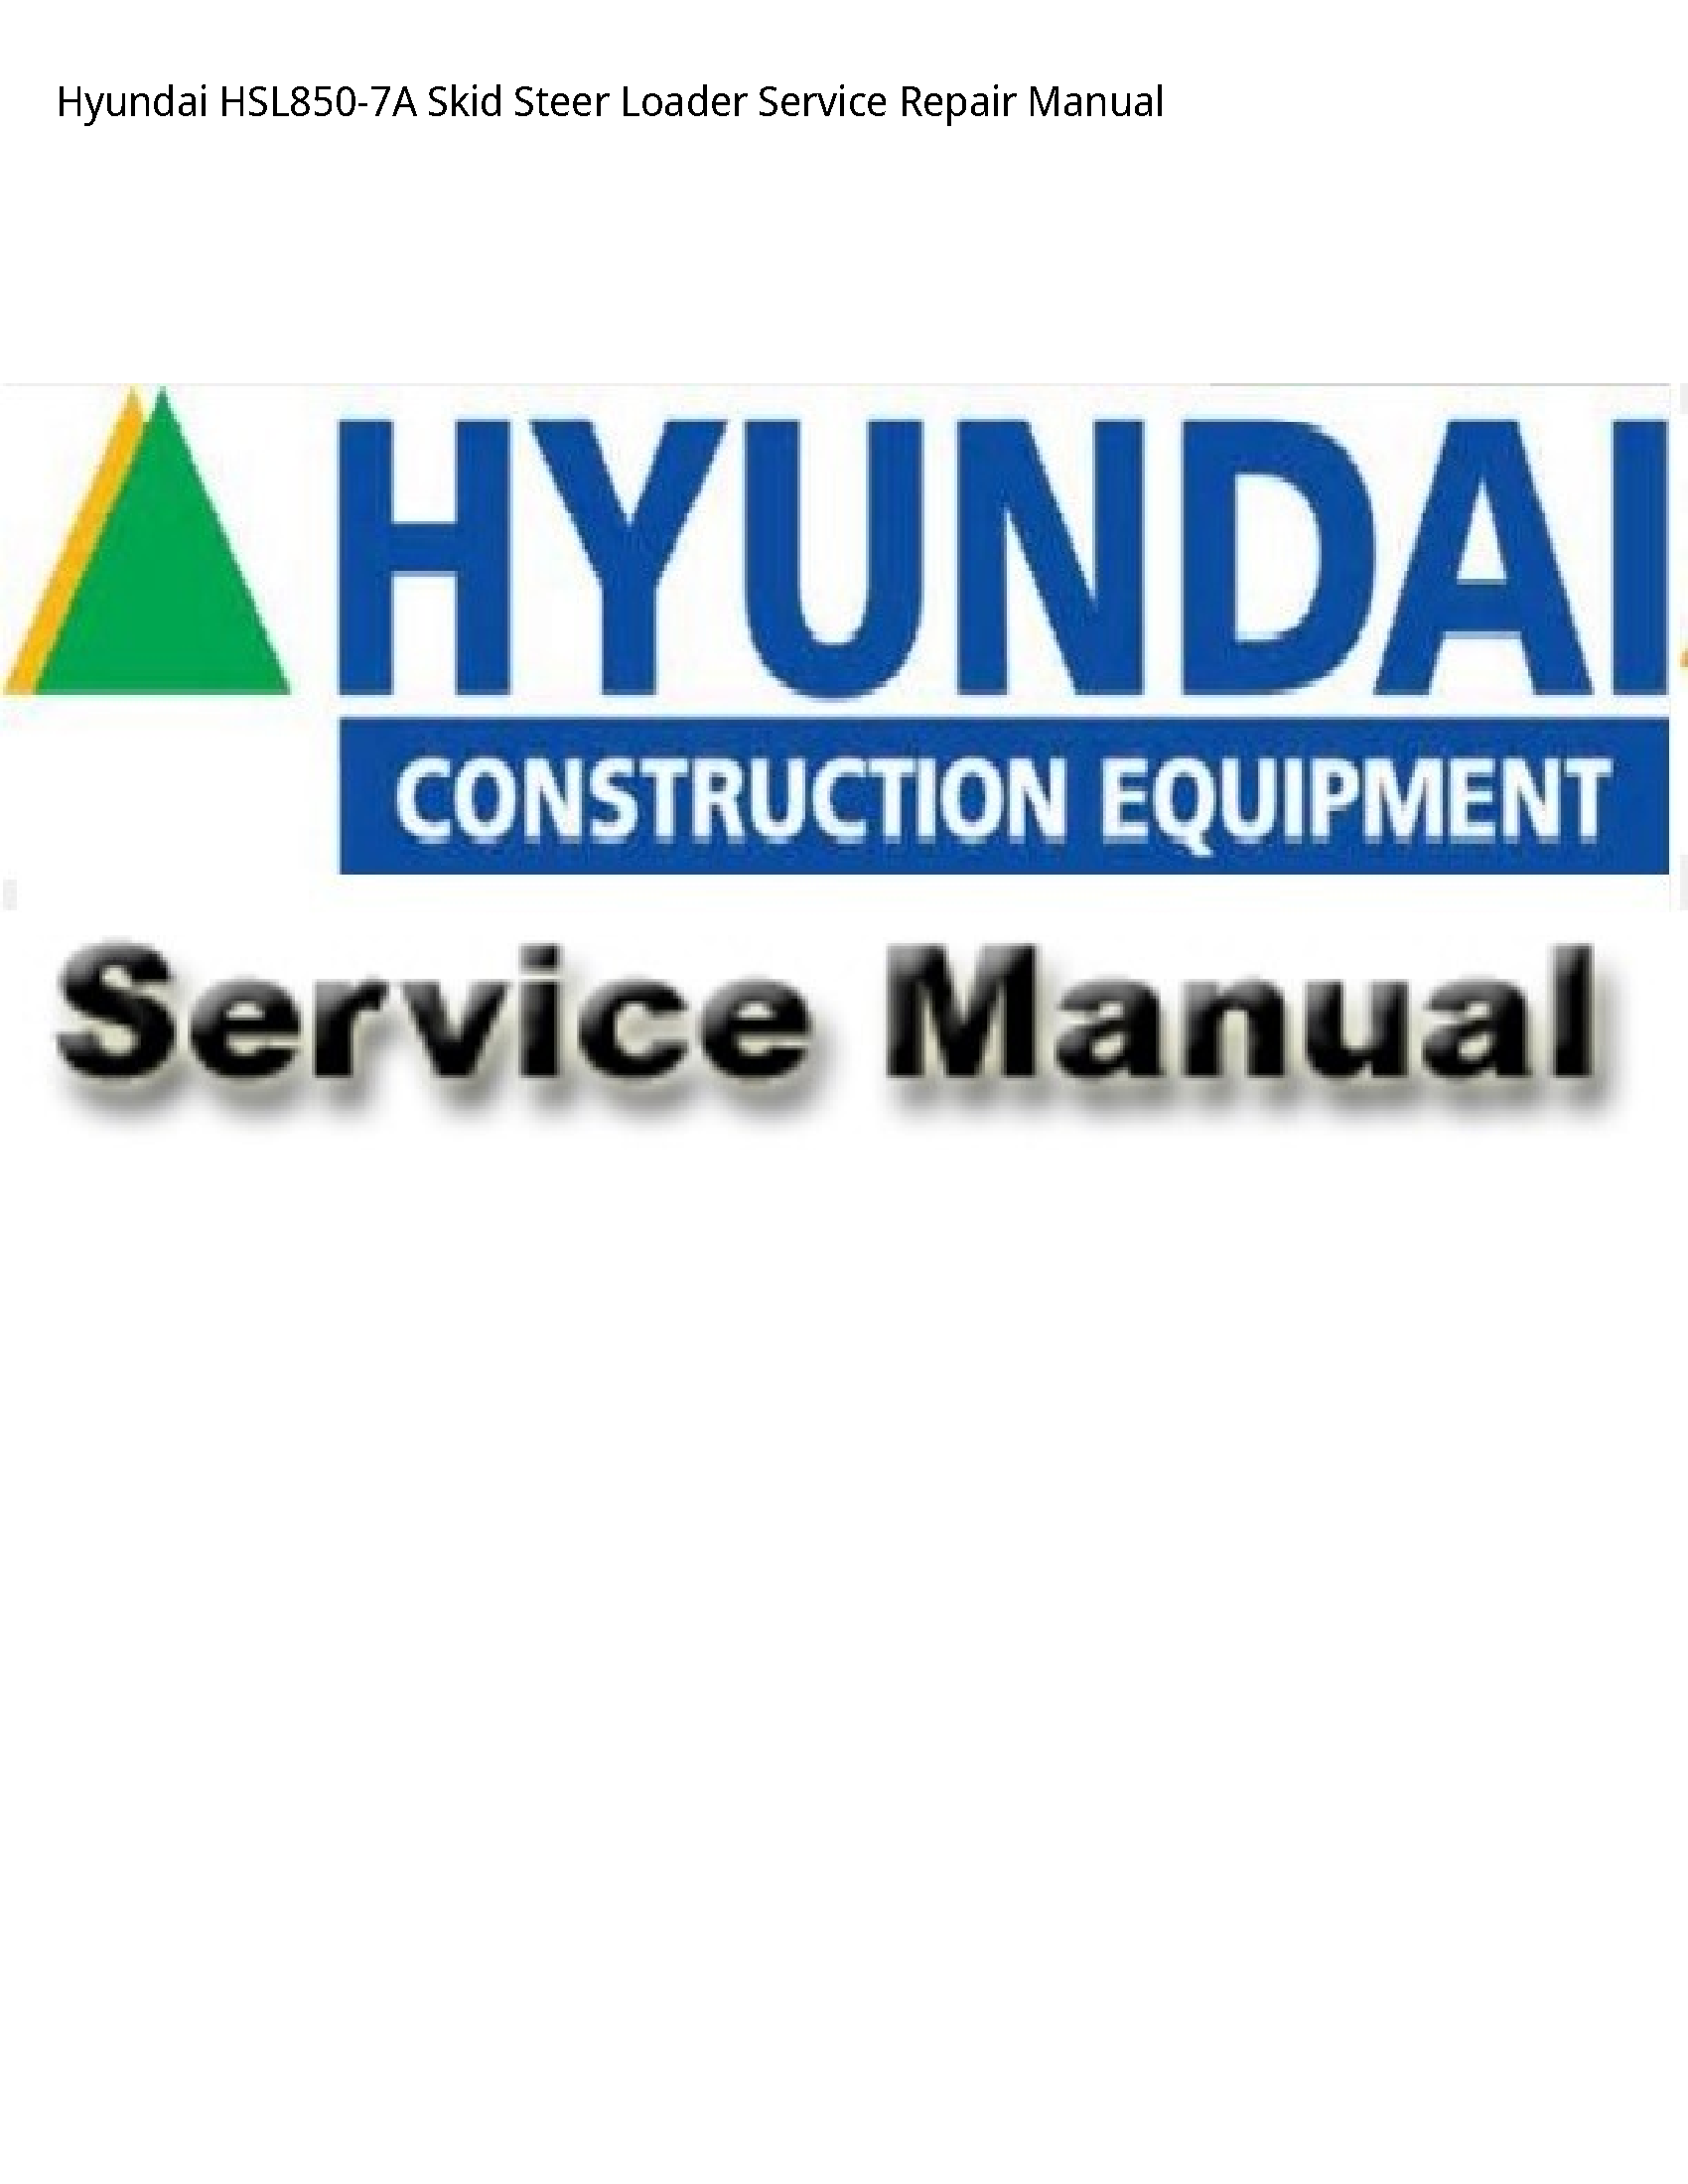 Hyundai HSL850-7A Skid Steer Loader manual